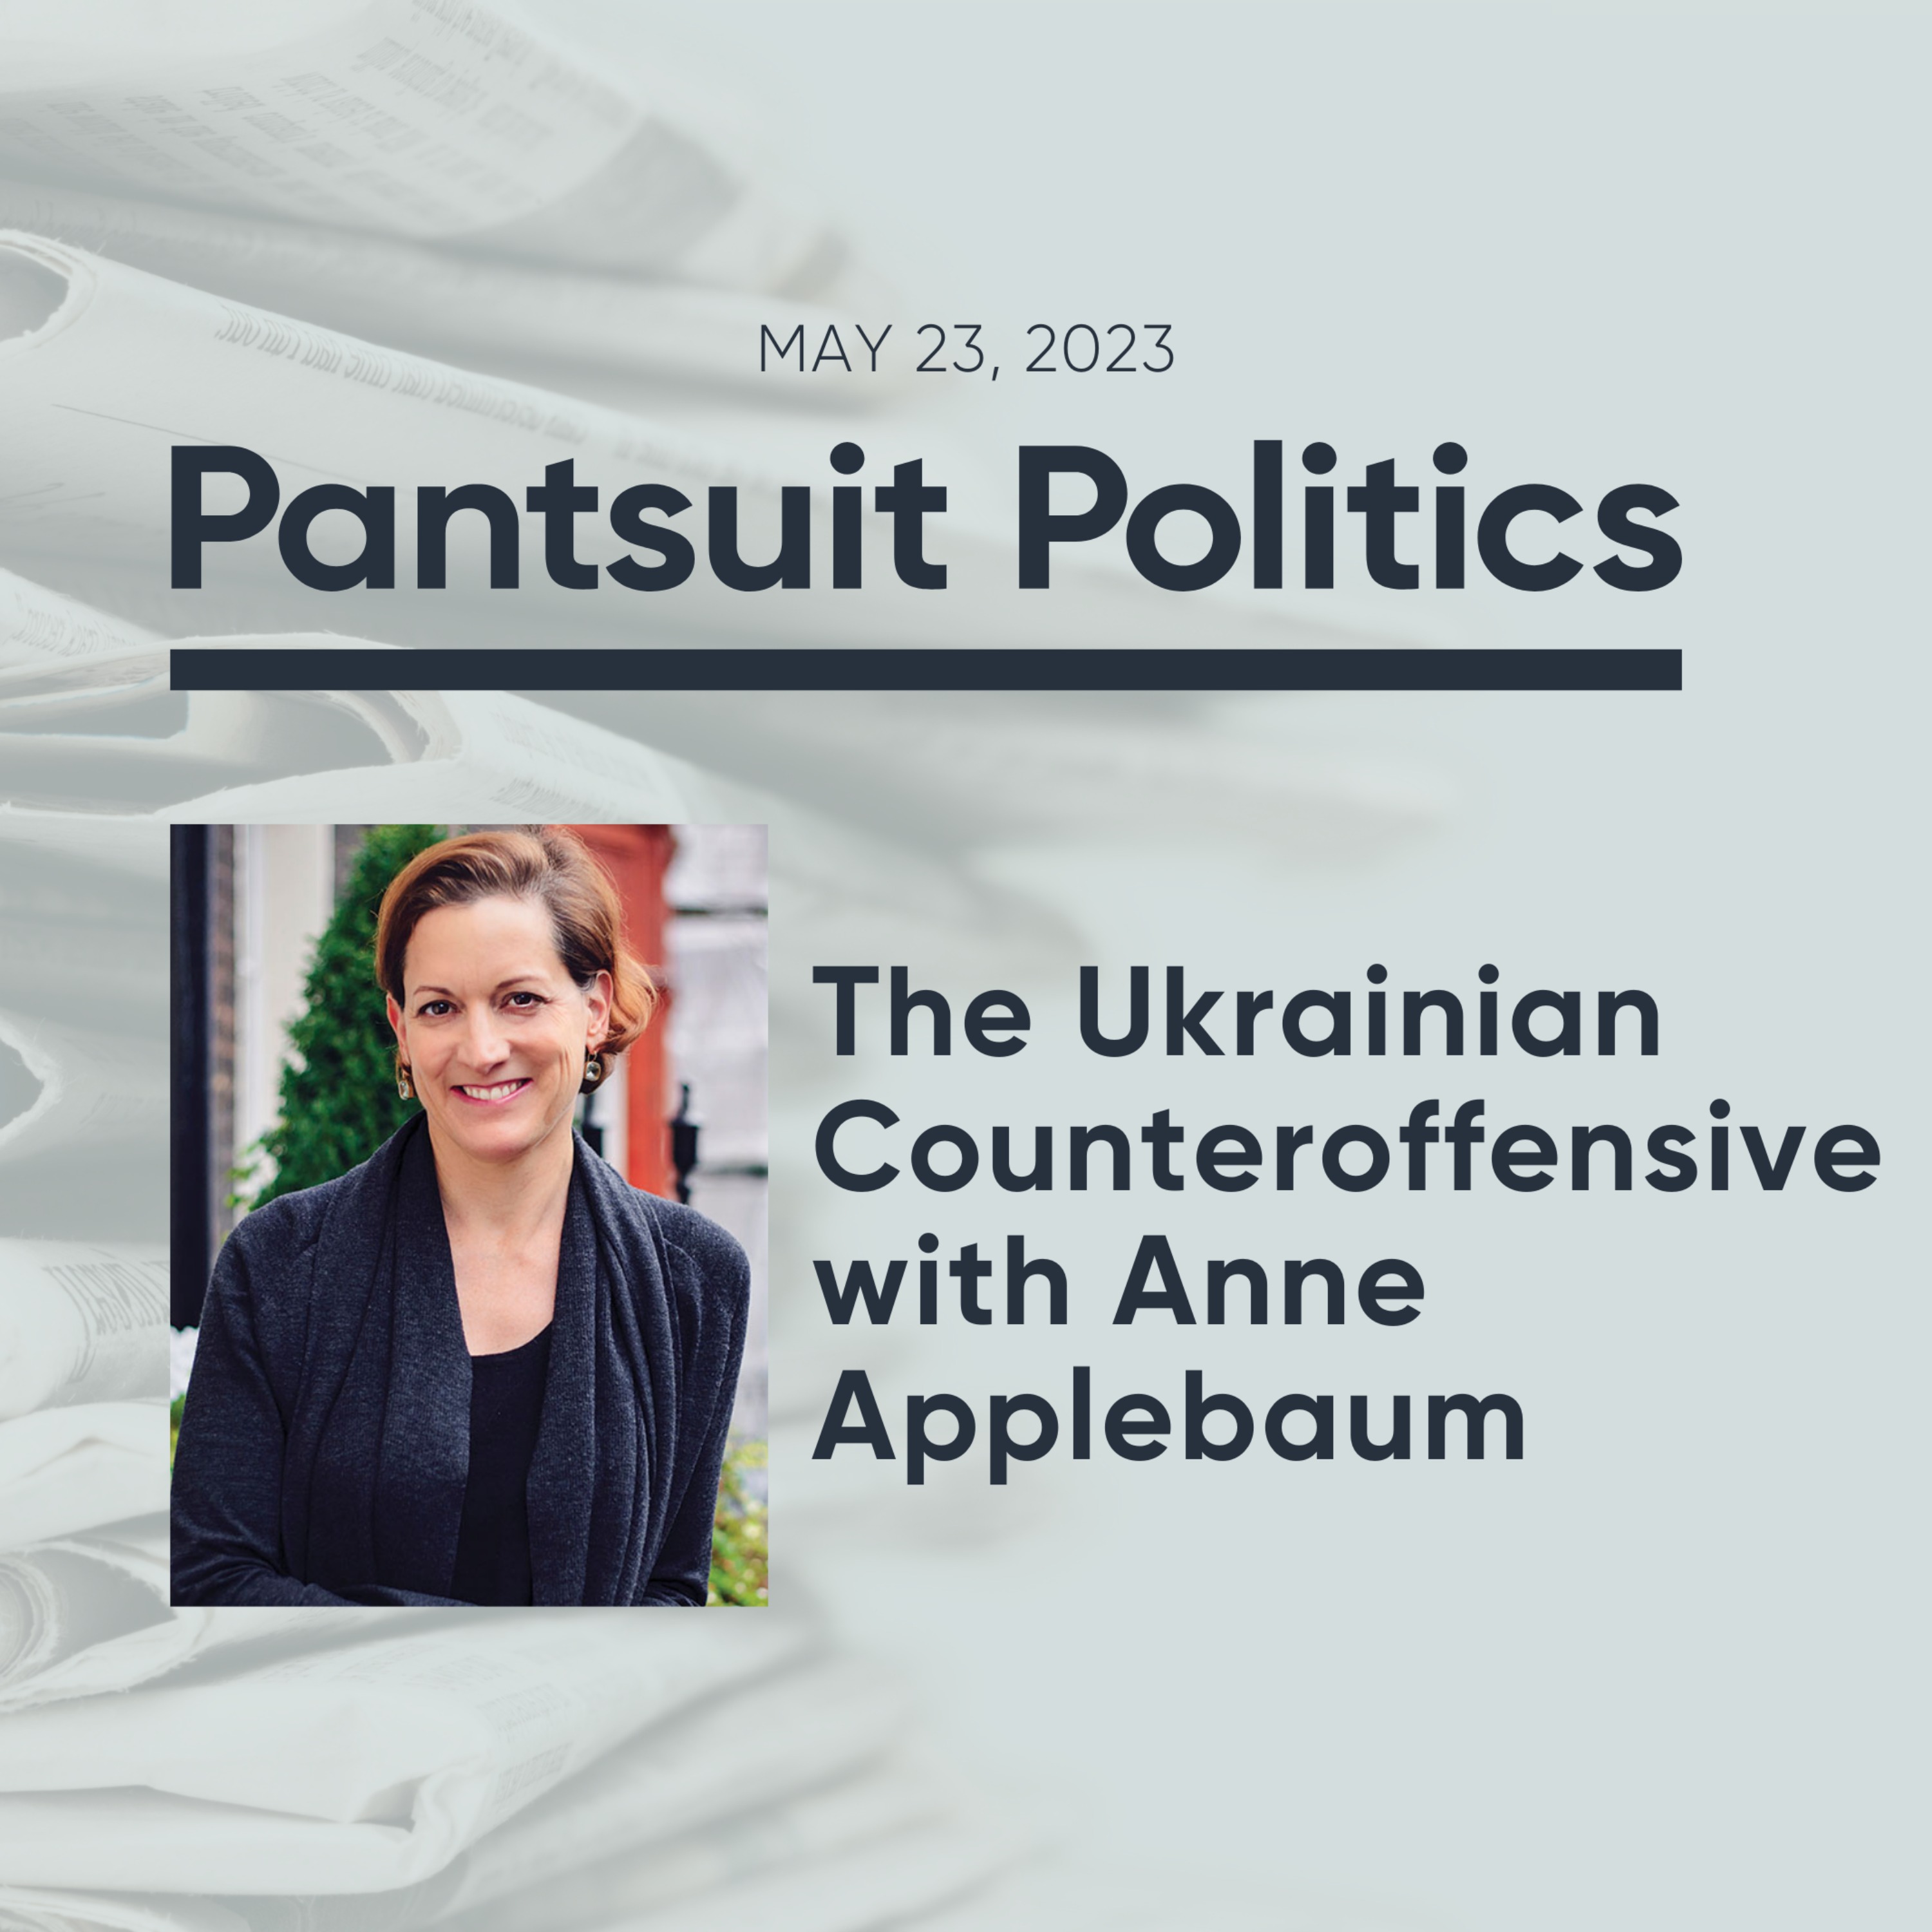 The Ukrainian Counteroffensive with Anne Applebaum